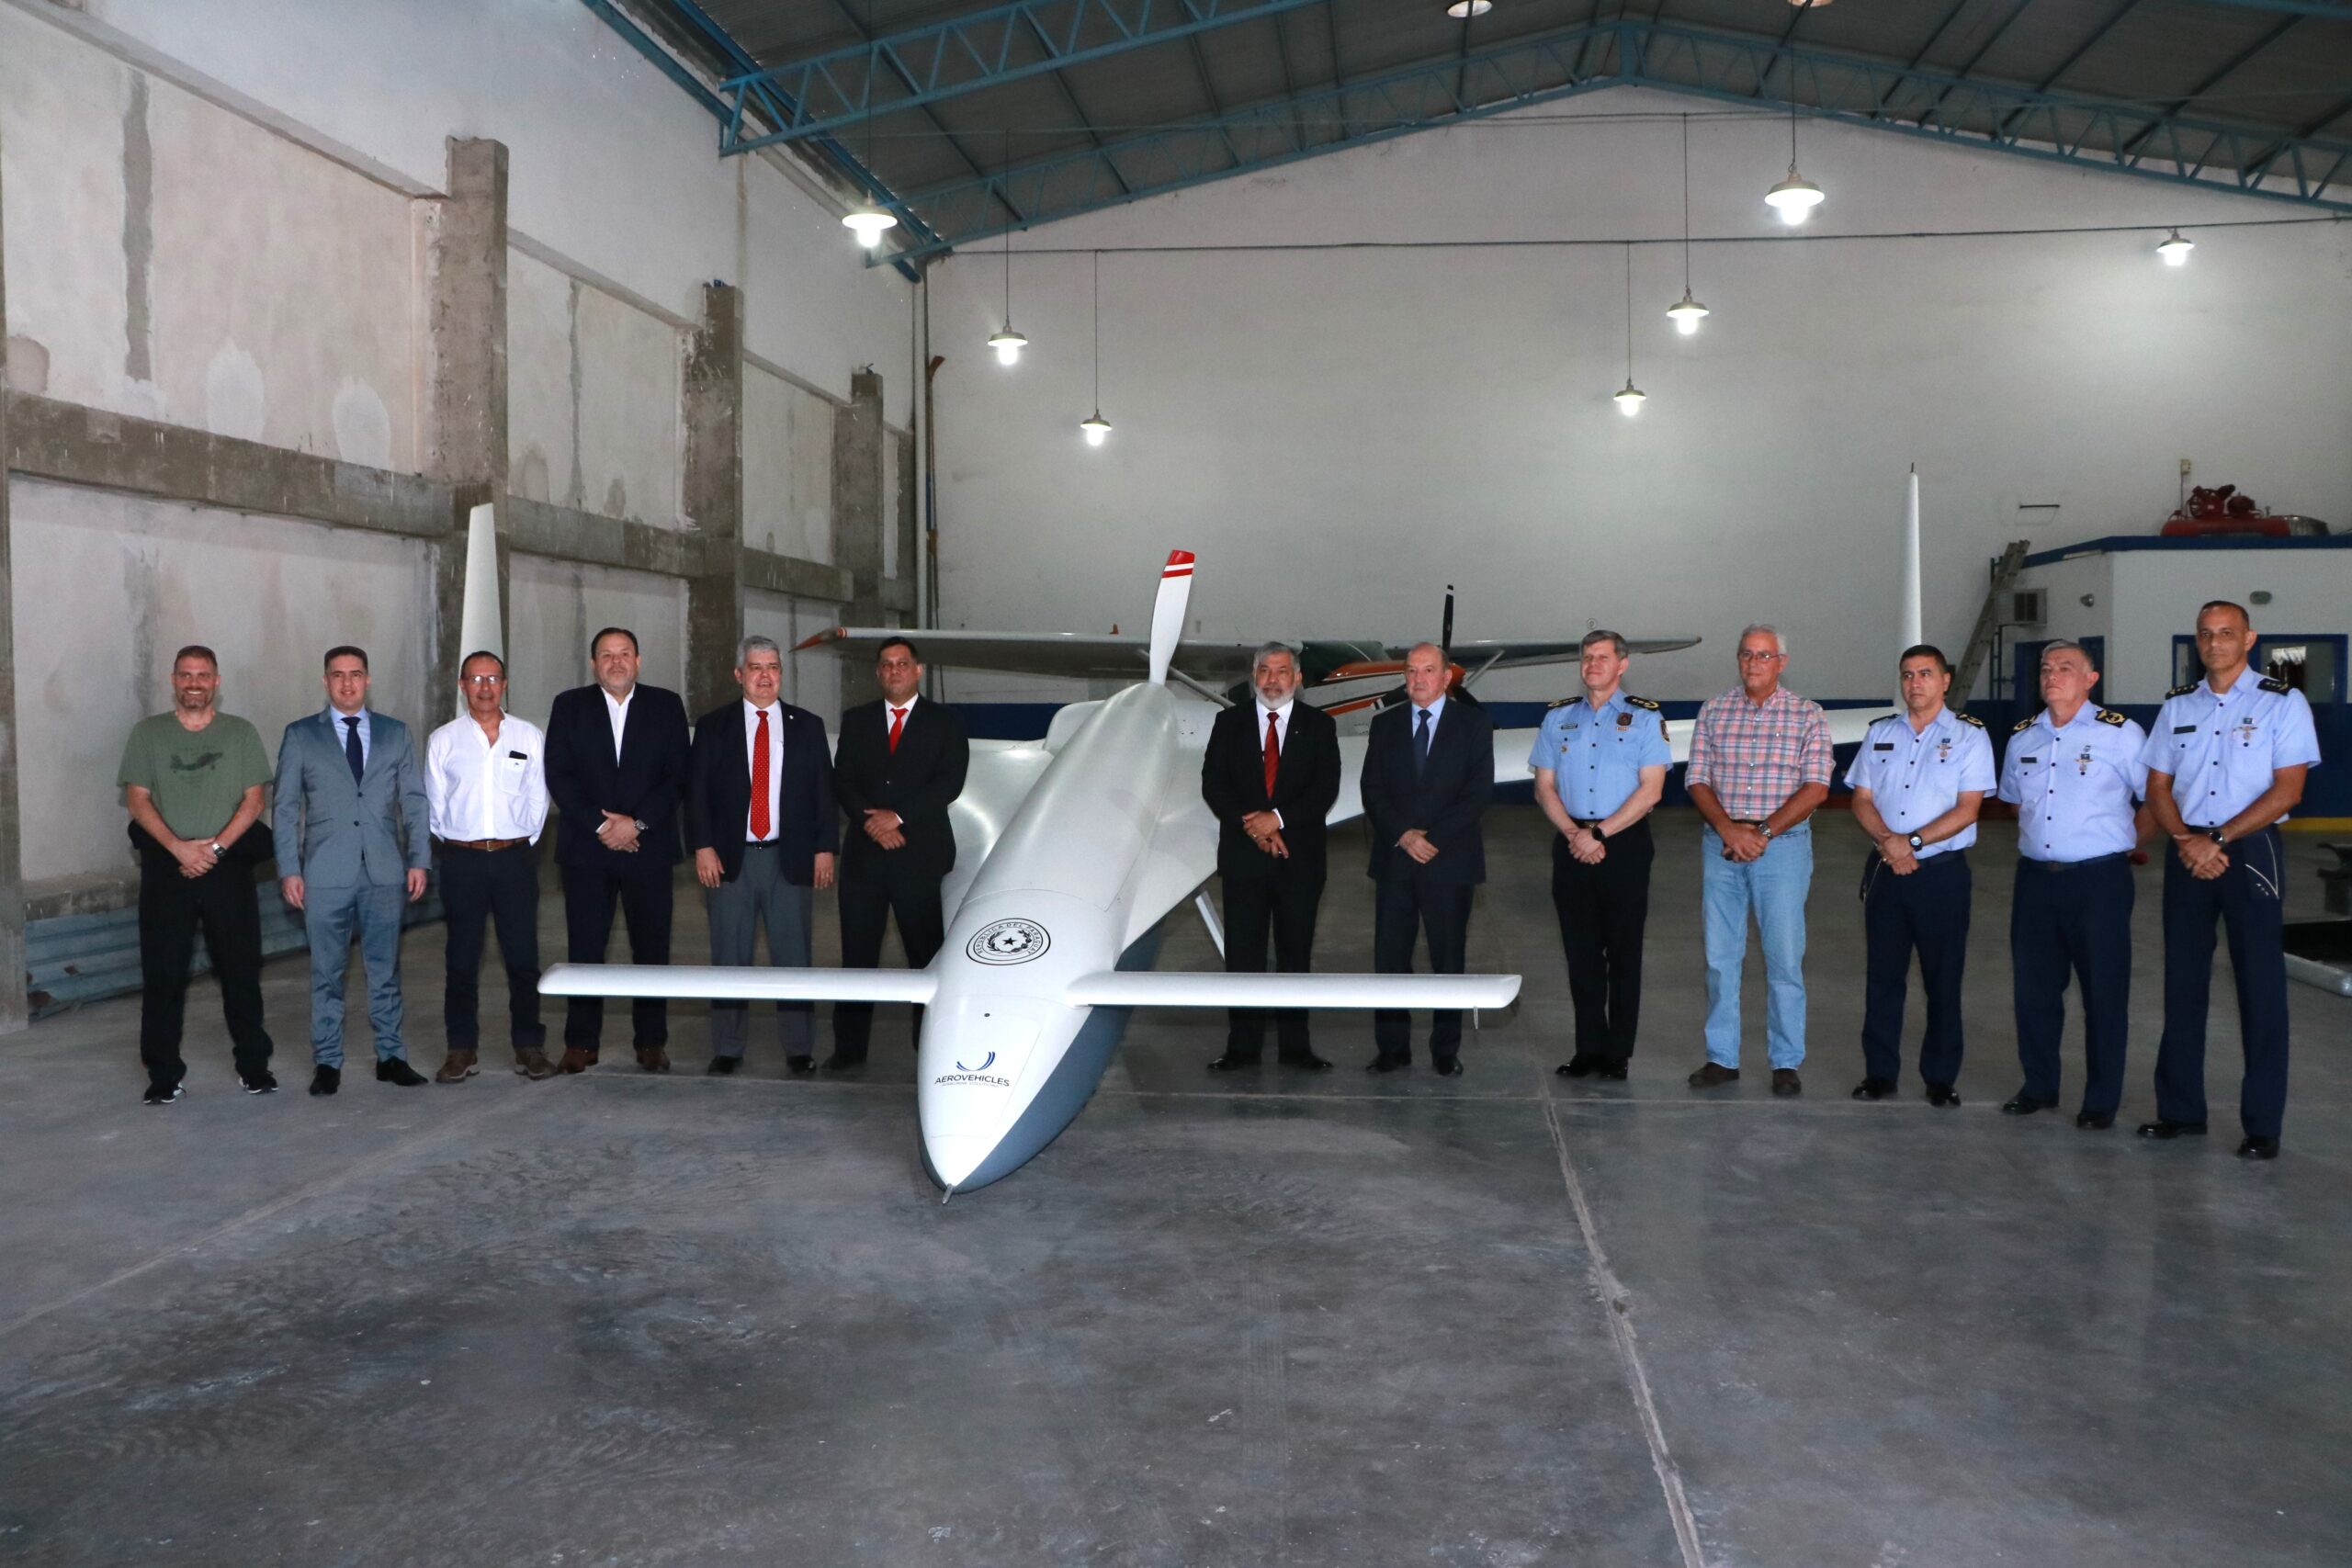 Visita Gubernamental - Berkut MBOPY UAV